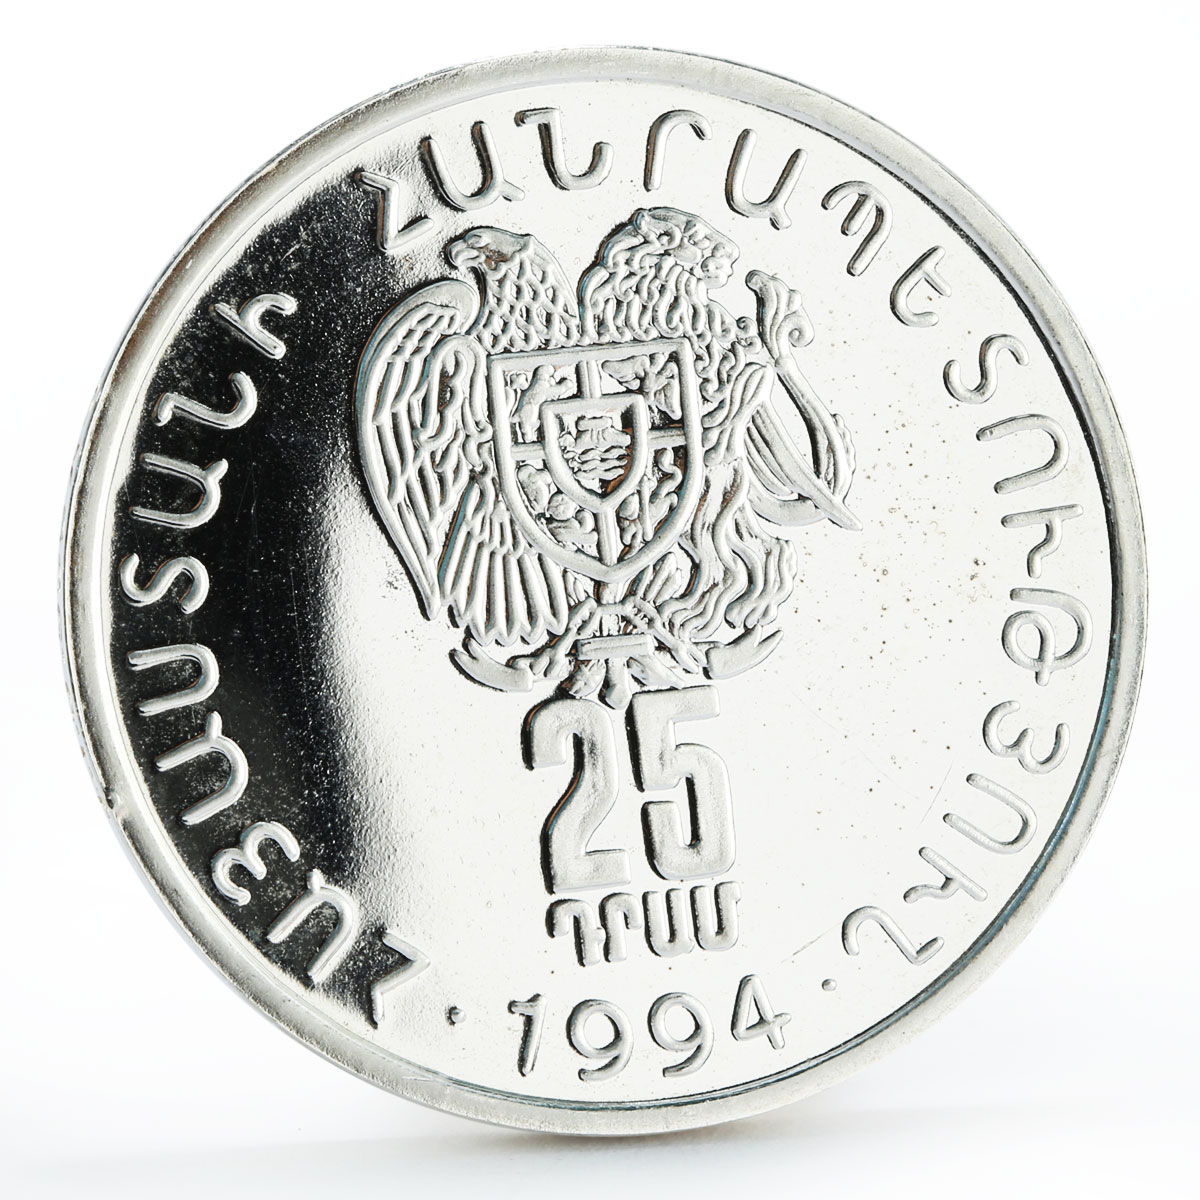 Armenia 25 dram Statue of the Hero David Sasoun on Horse proof silver coin 1994